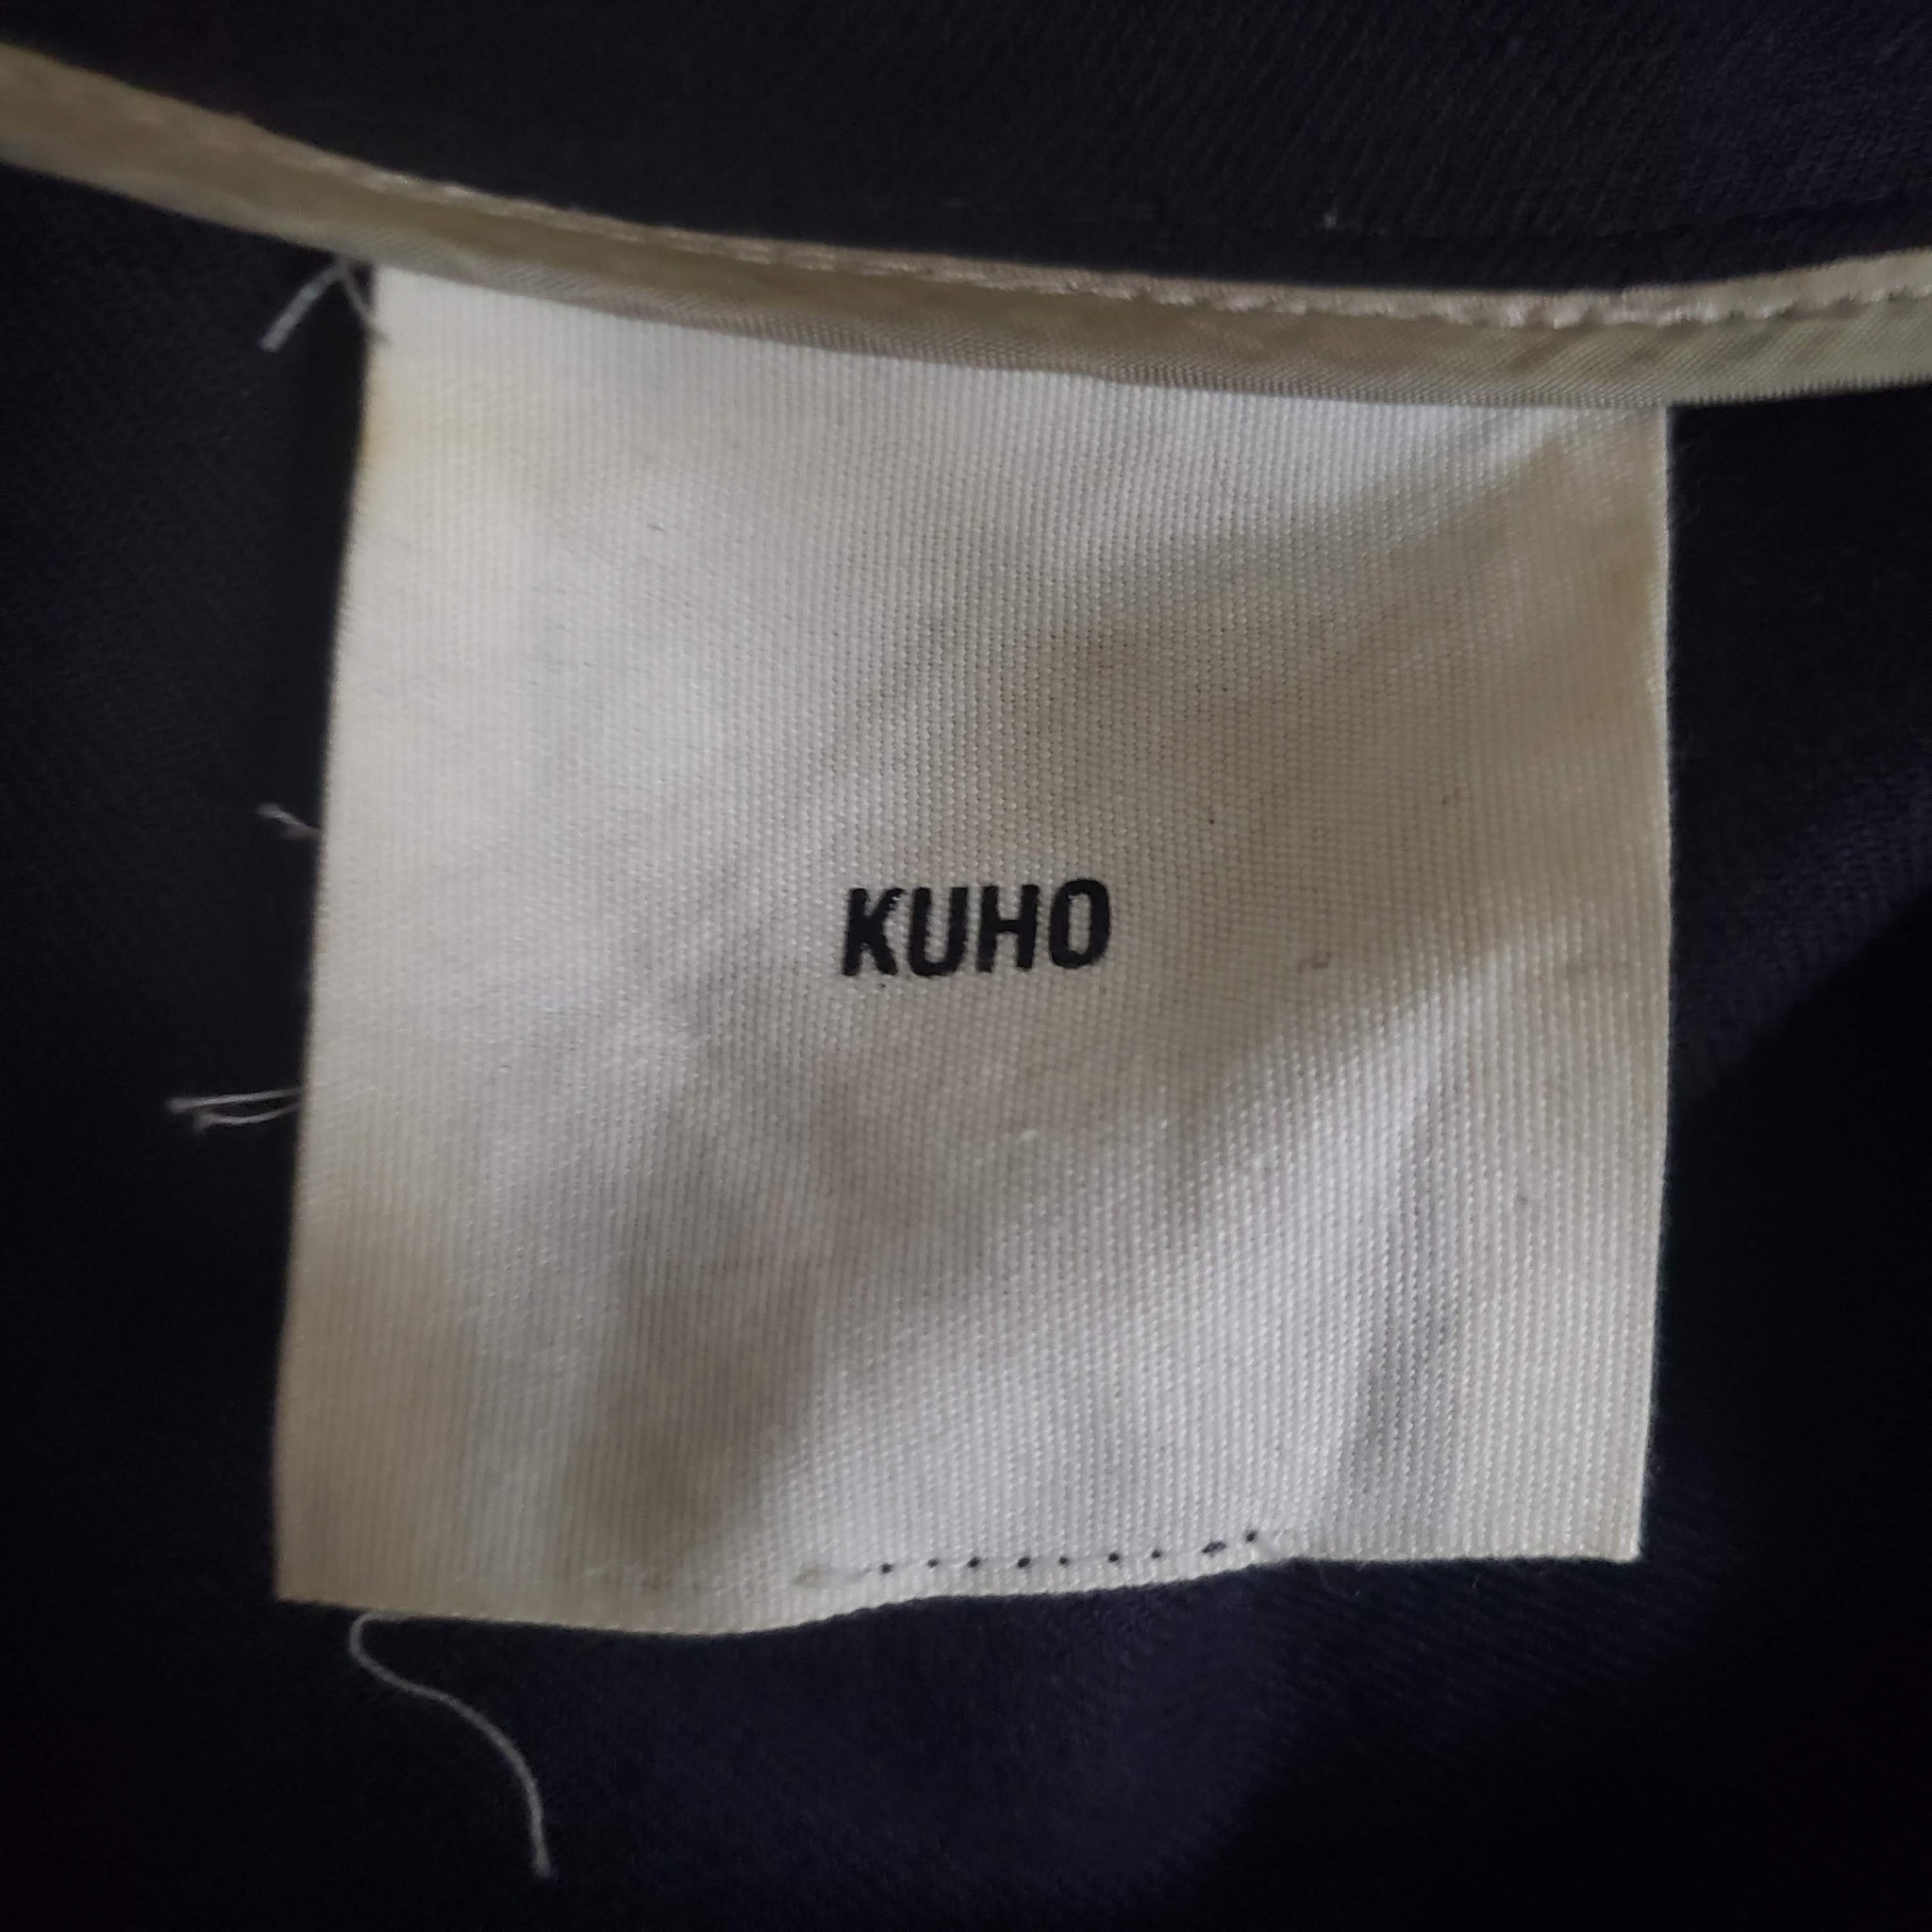 Kuho Cotton Twill Jacket Size Small